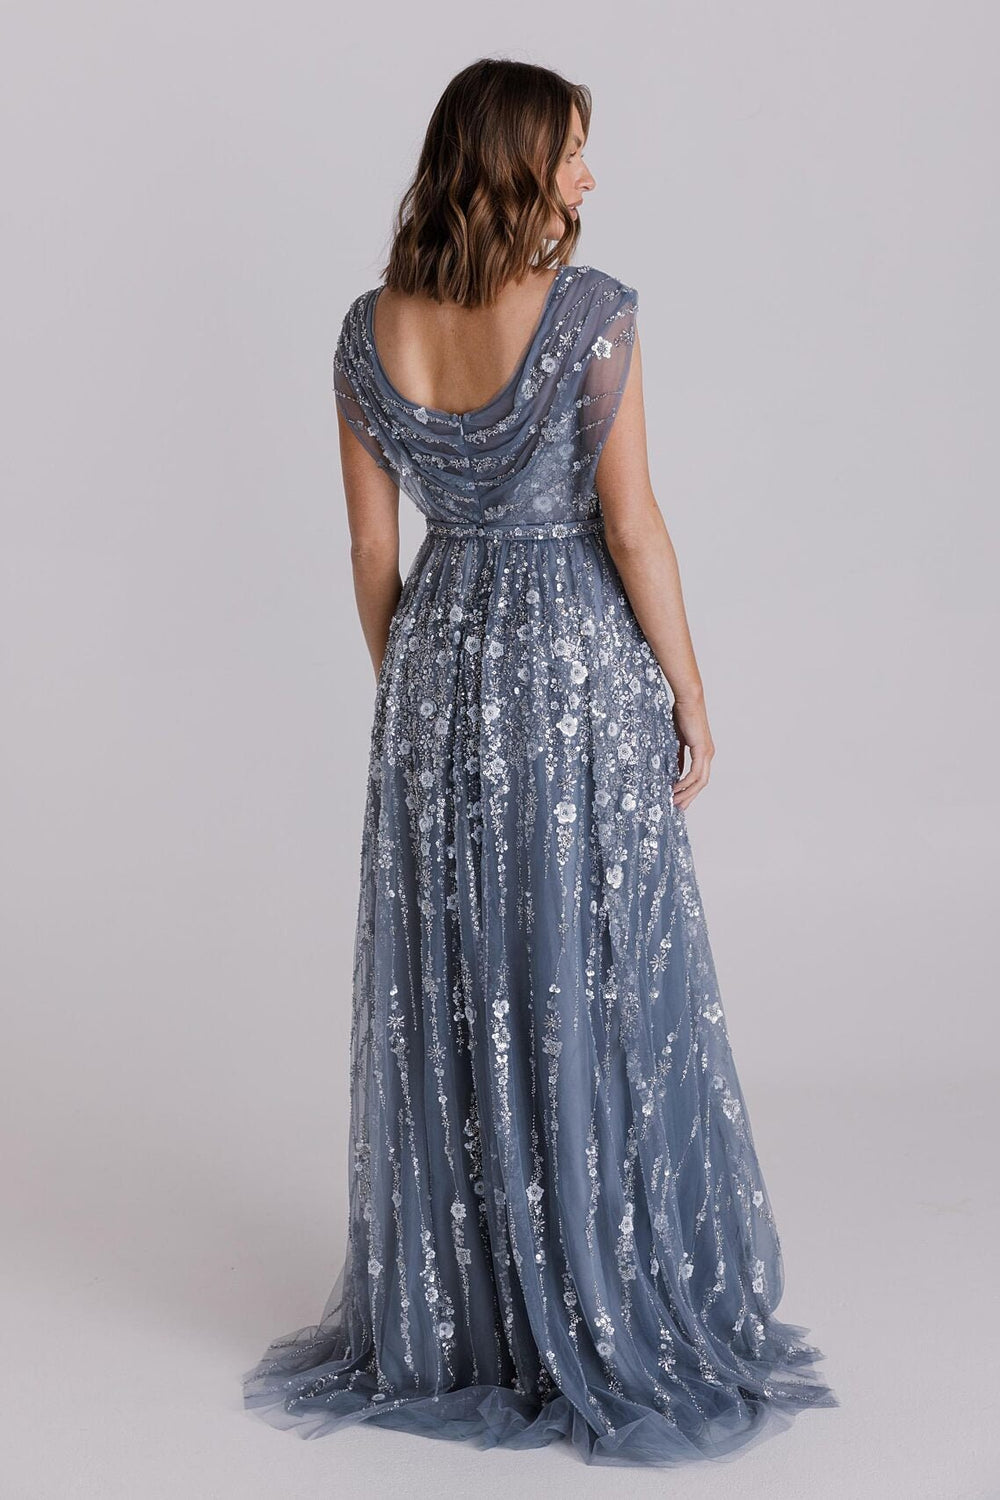 Solene Dress by Tania Olsen M09 - ElissaJay Boutique